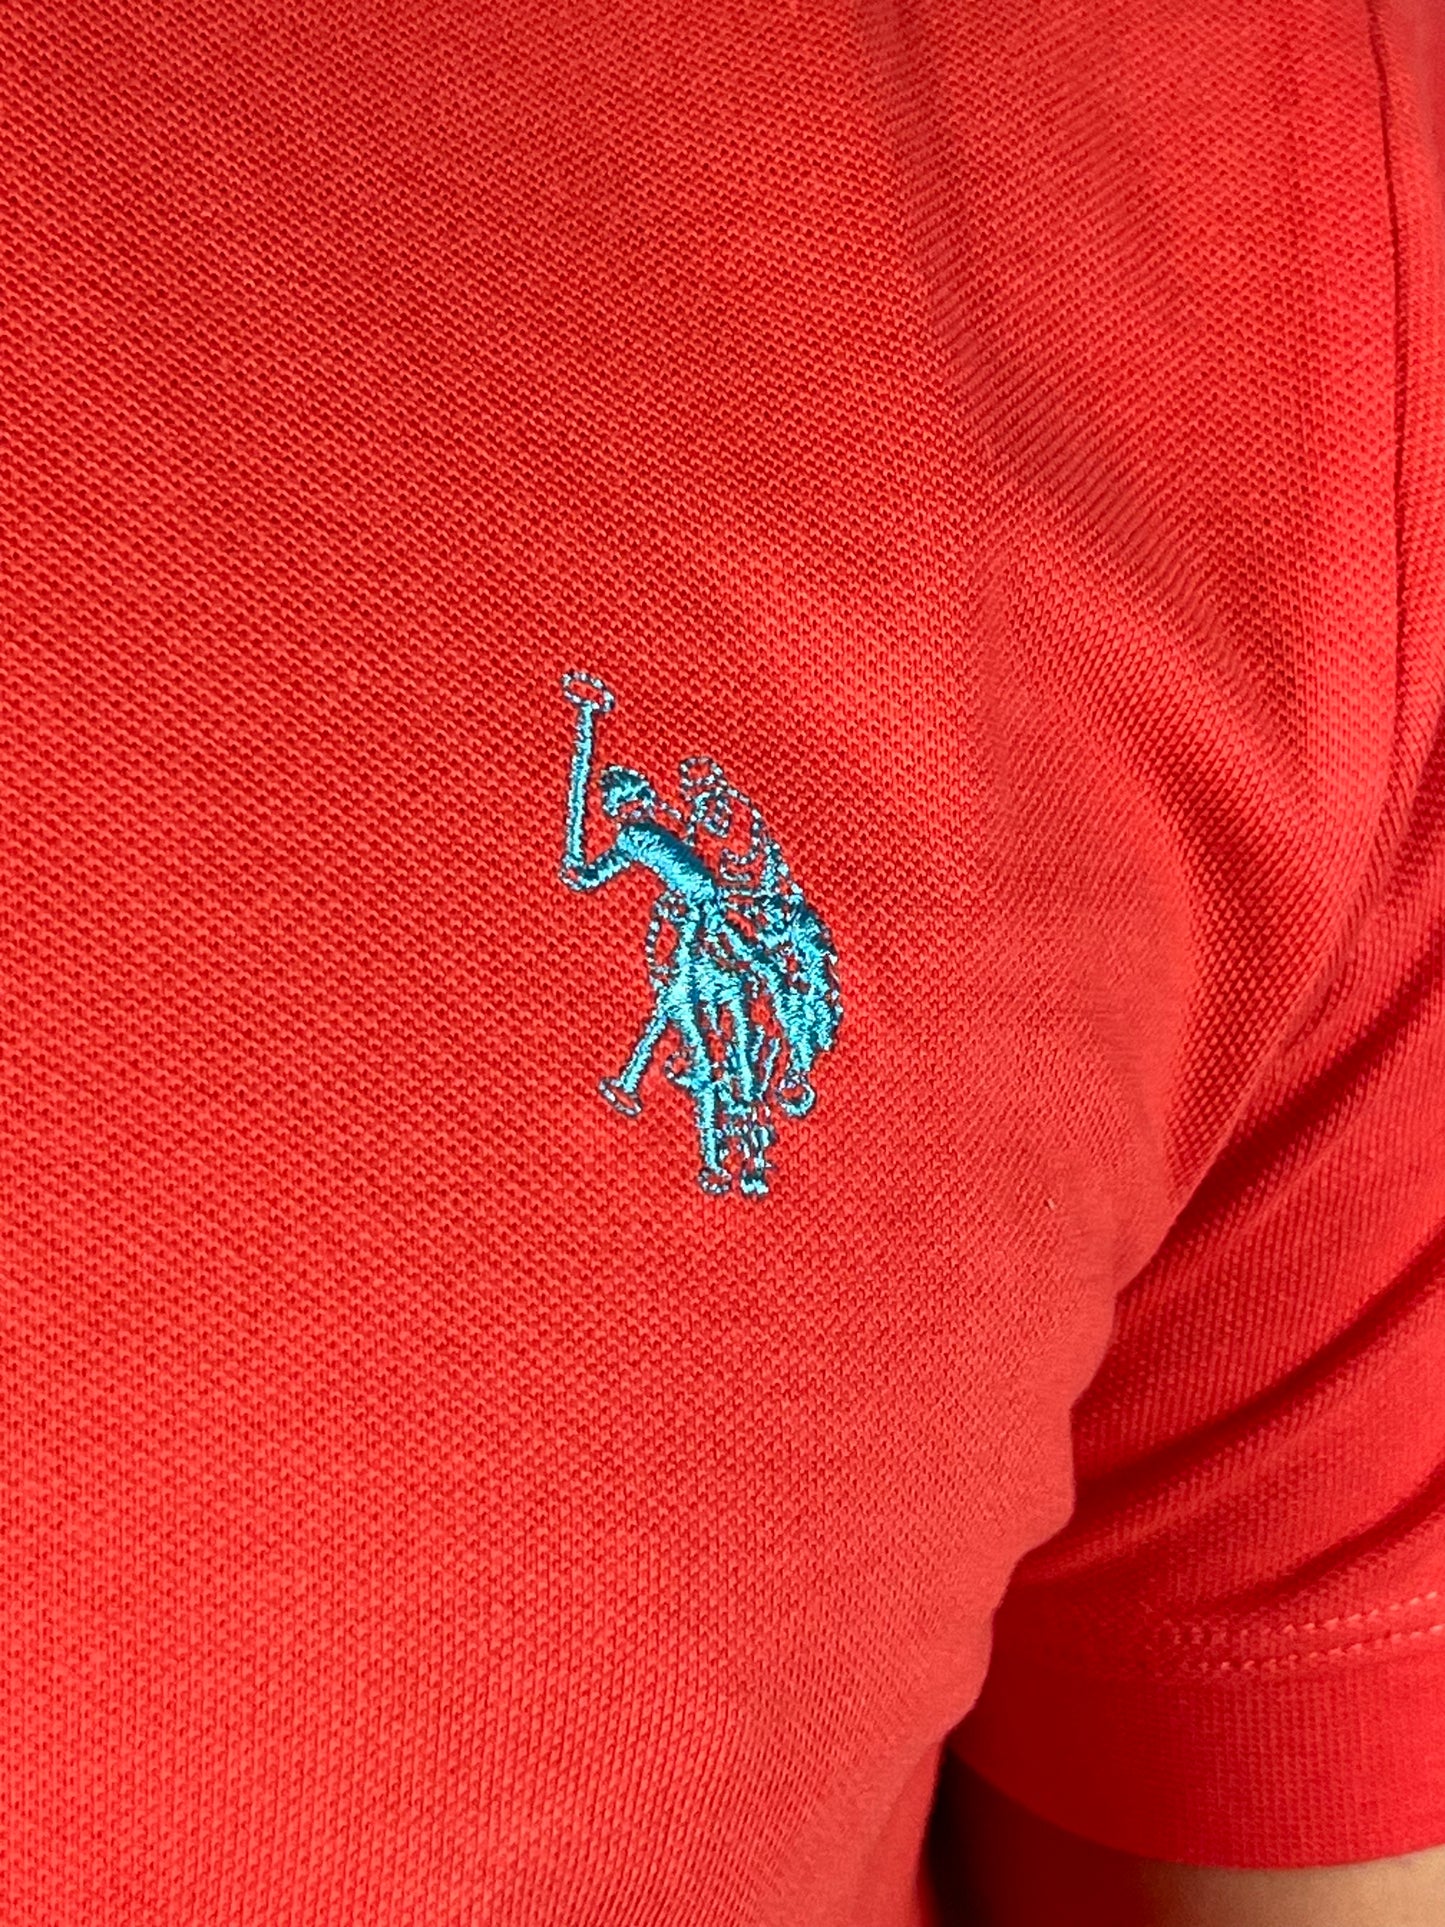 T-shirt bren arancione con logo azzurro nido d'ape